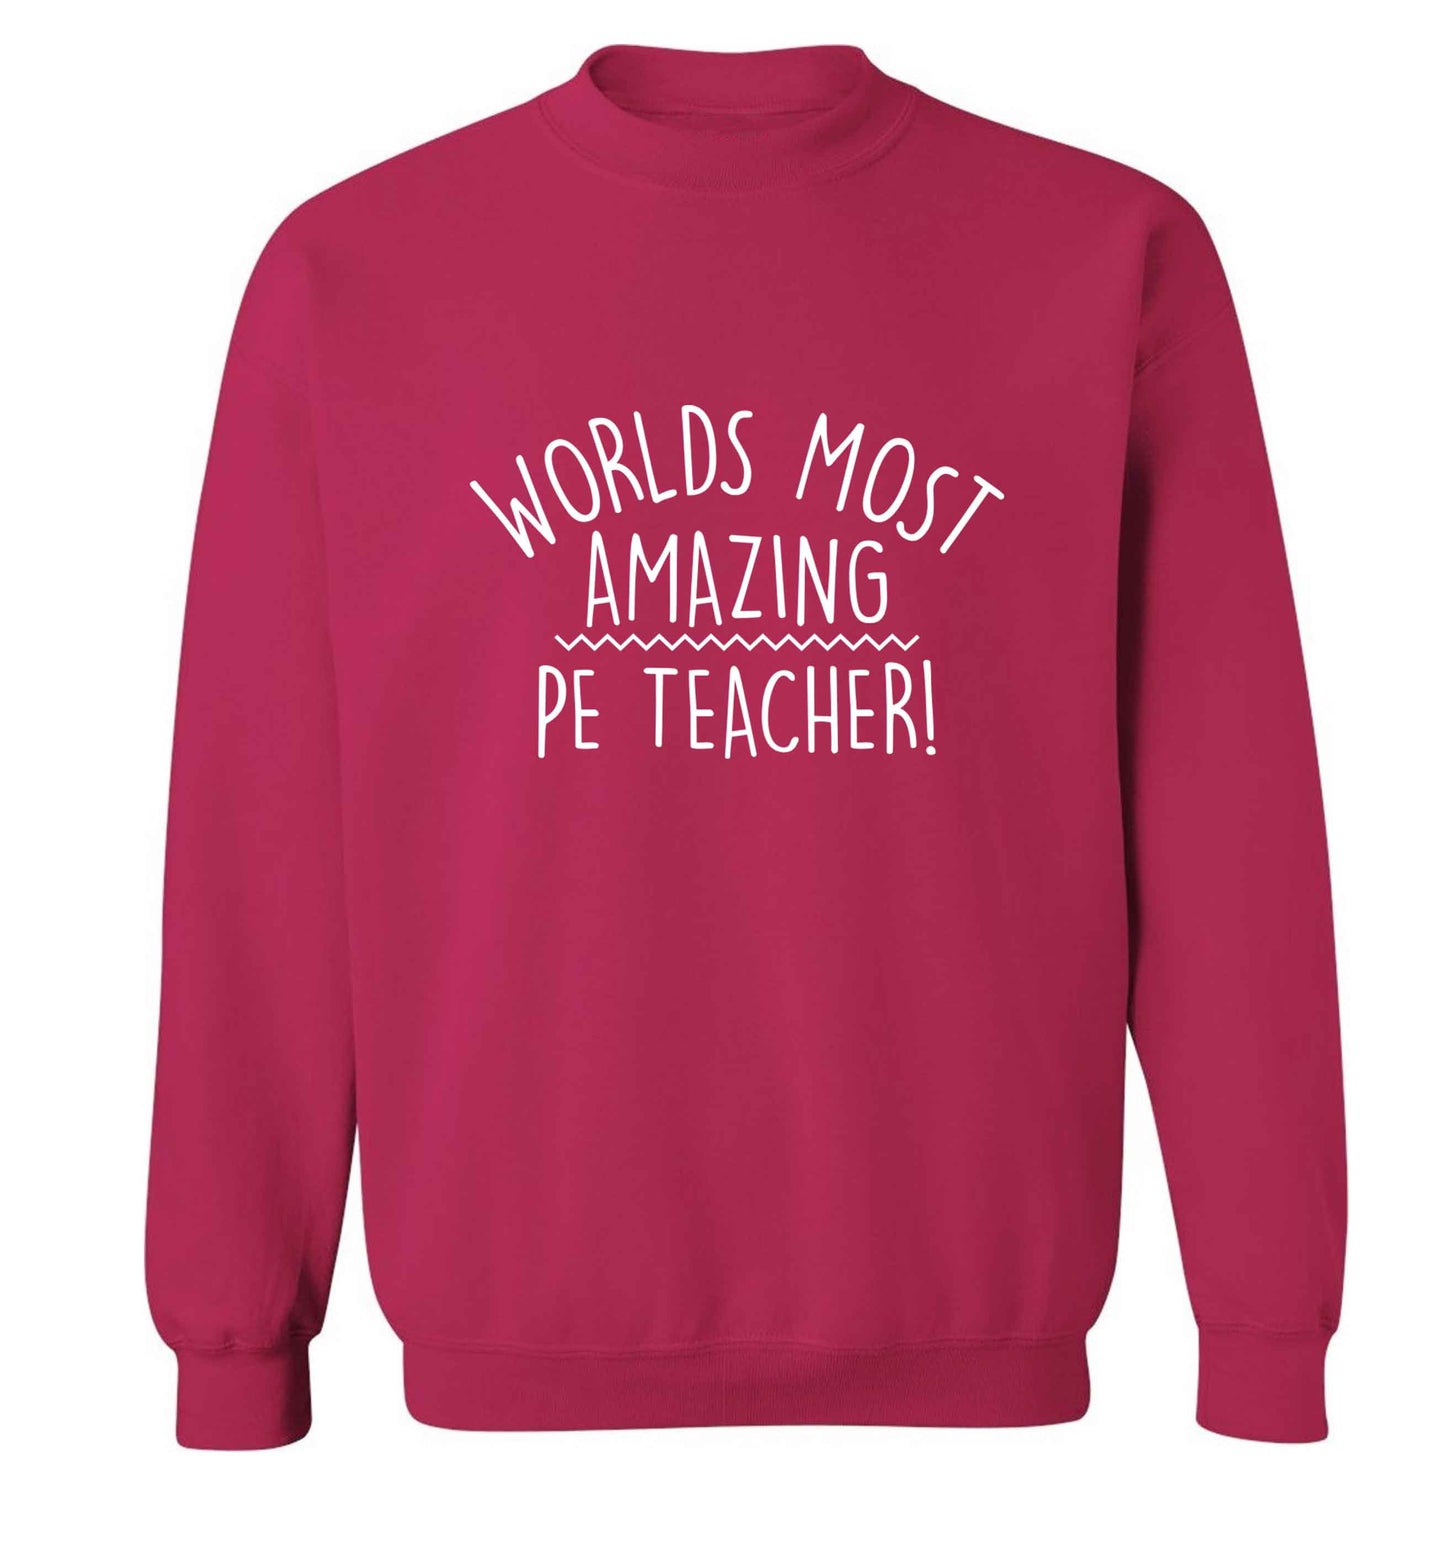 Worlds most amazing PE teacher adult's unisex pink sweater 2XL